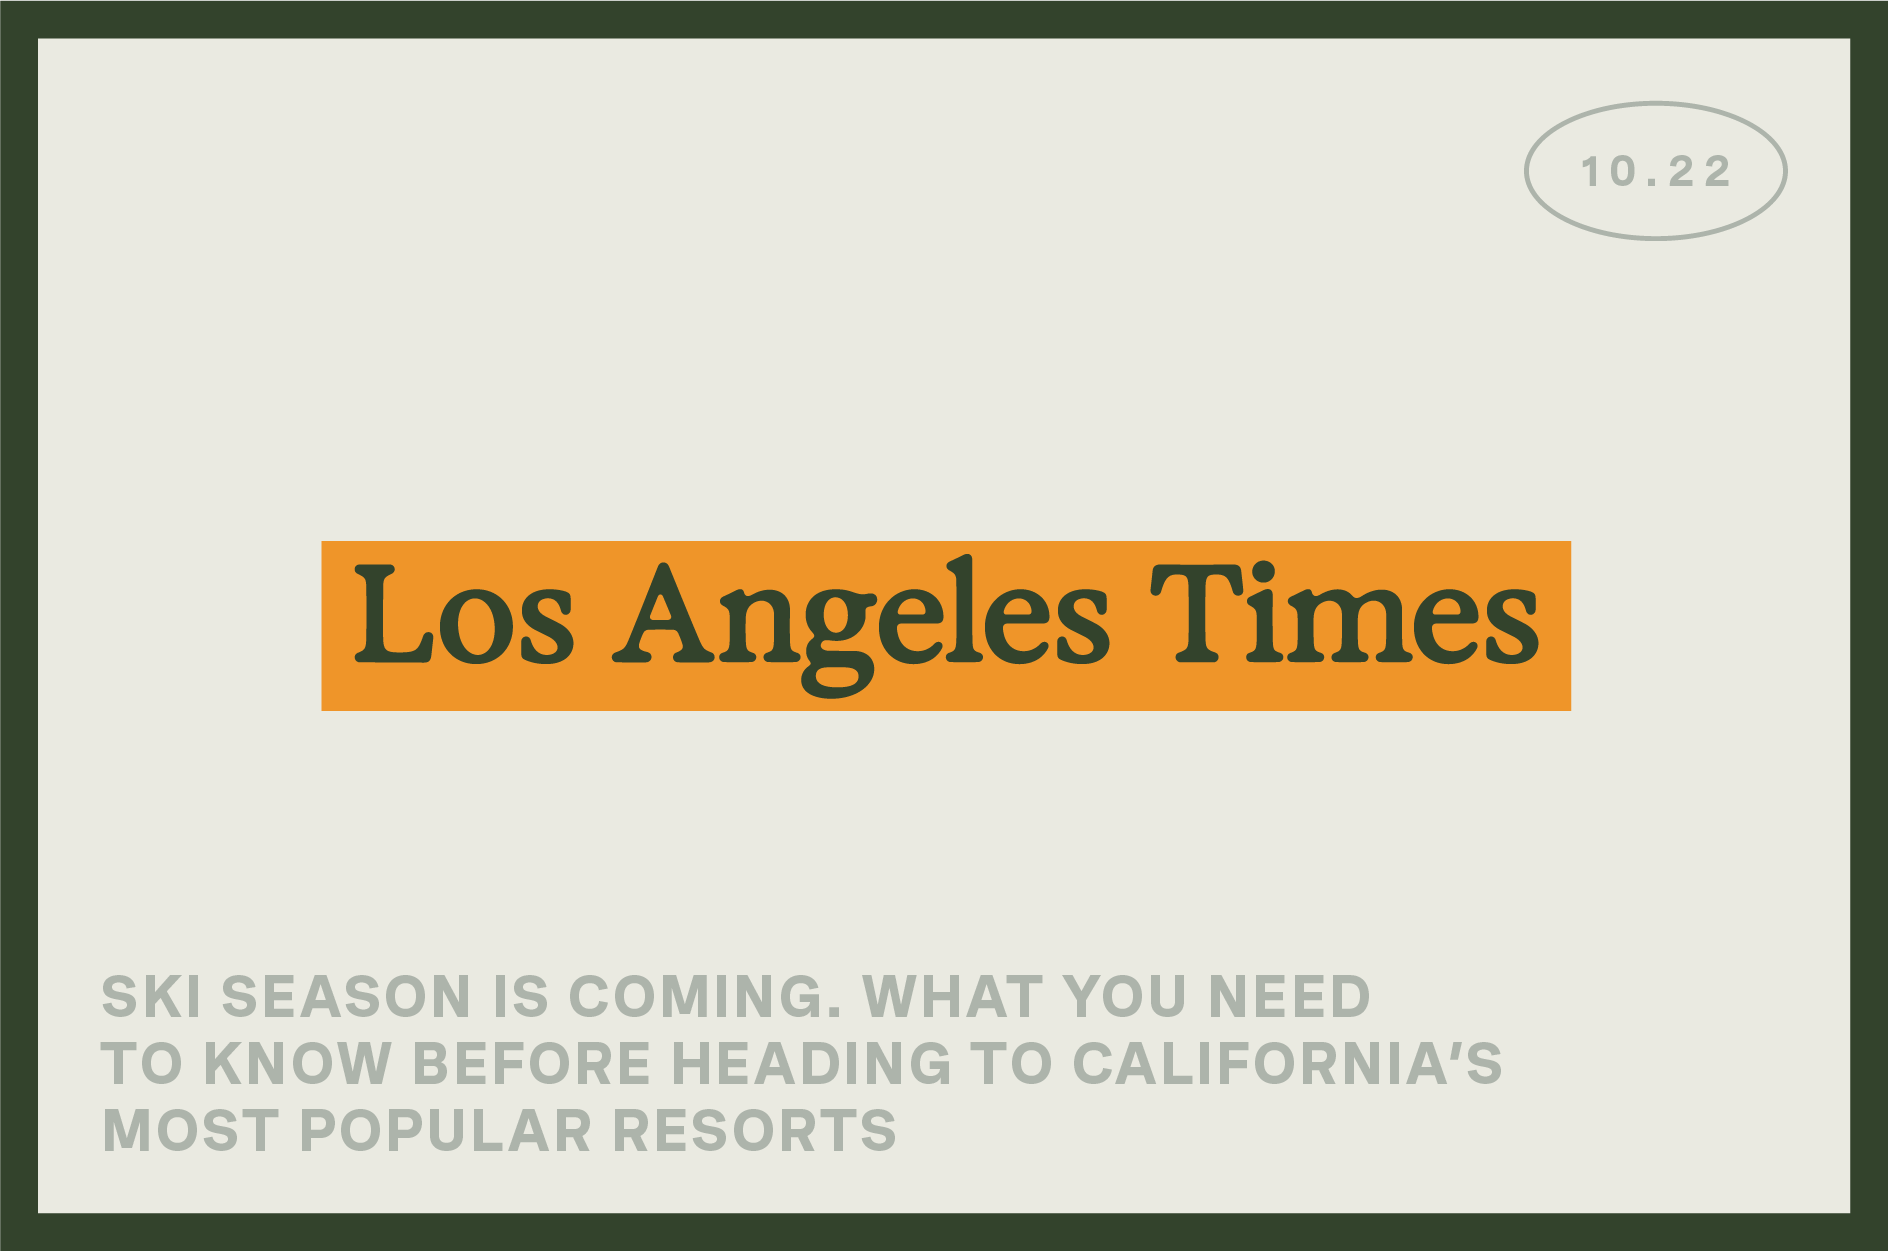 "Los Angeles Times" banner previews ski season in California's popular resorts, providing essential information.